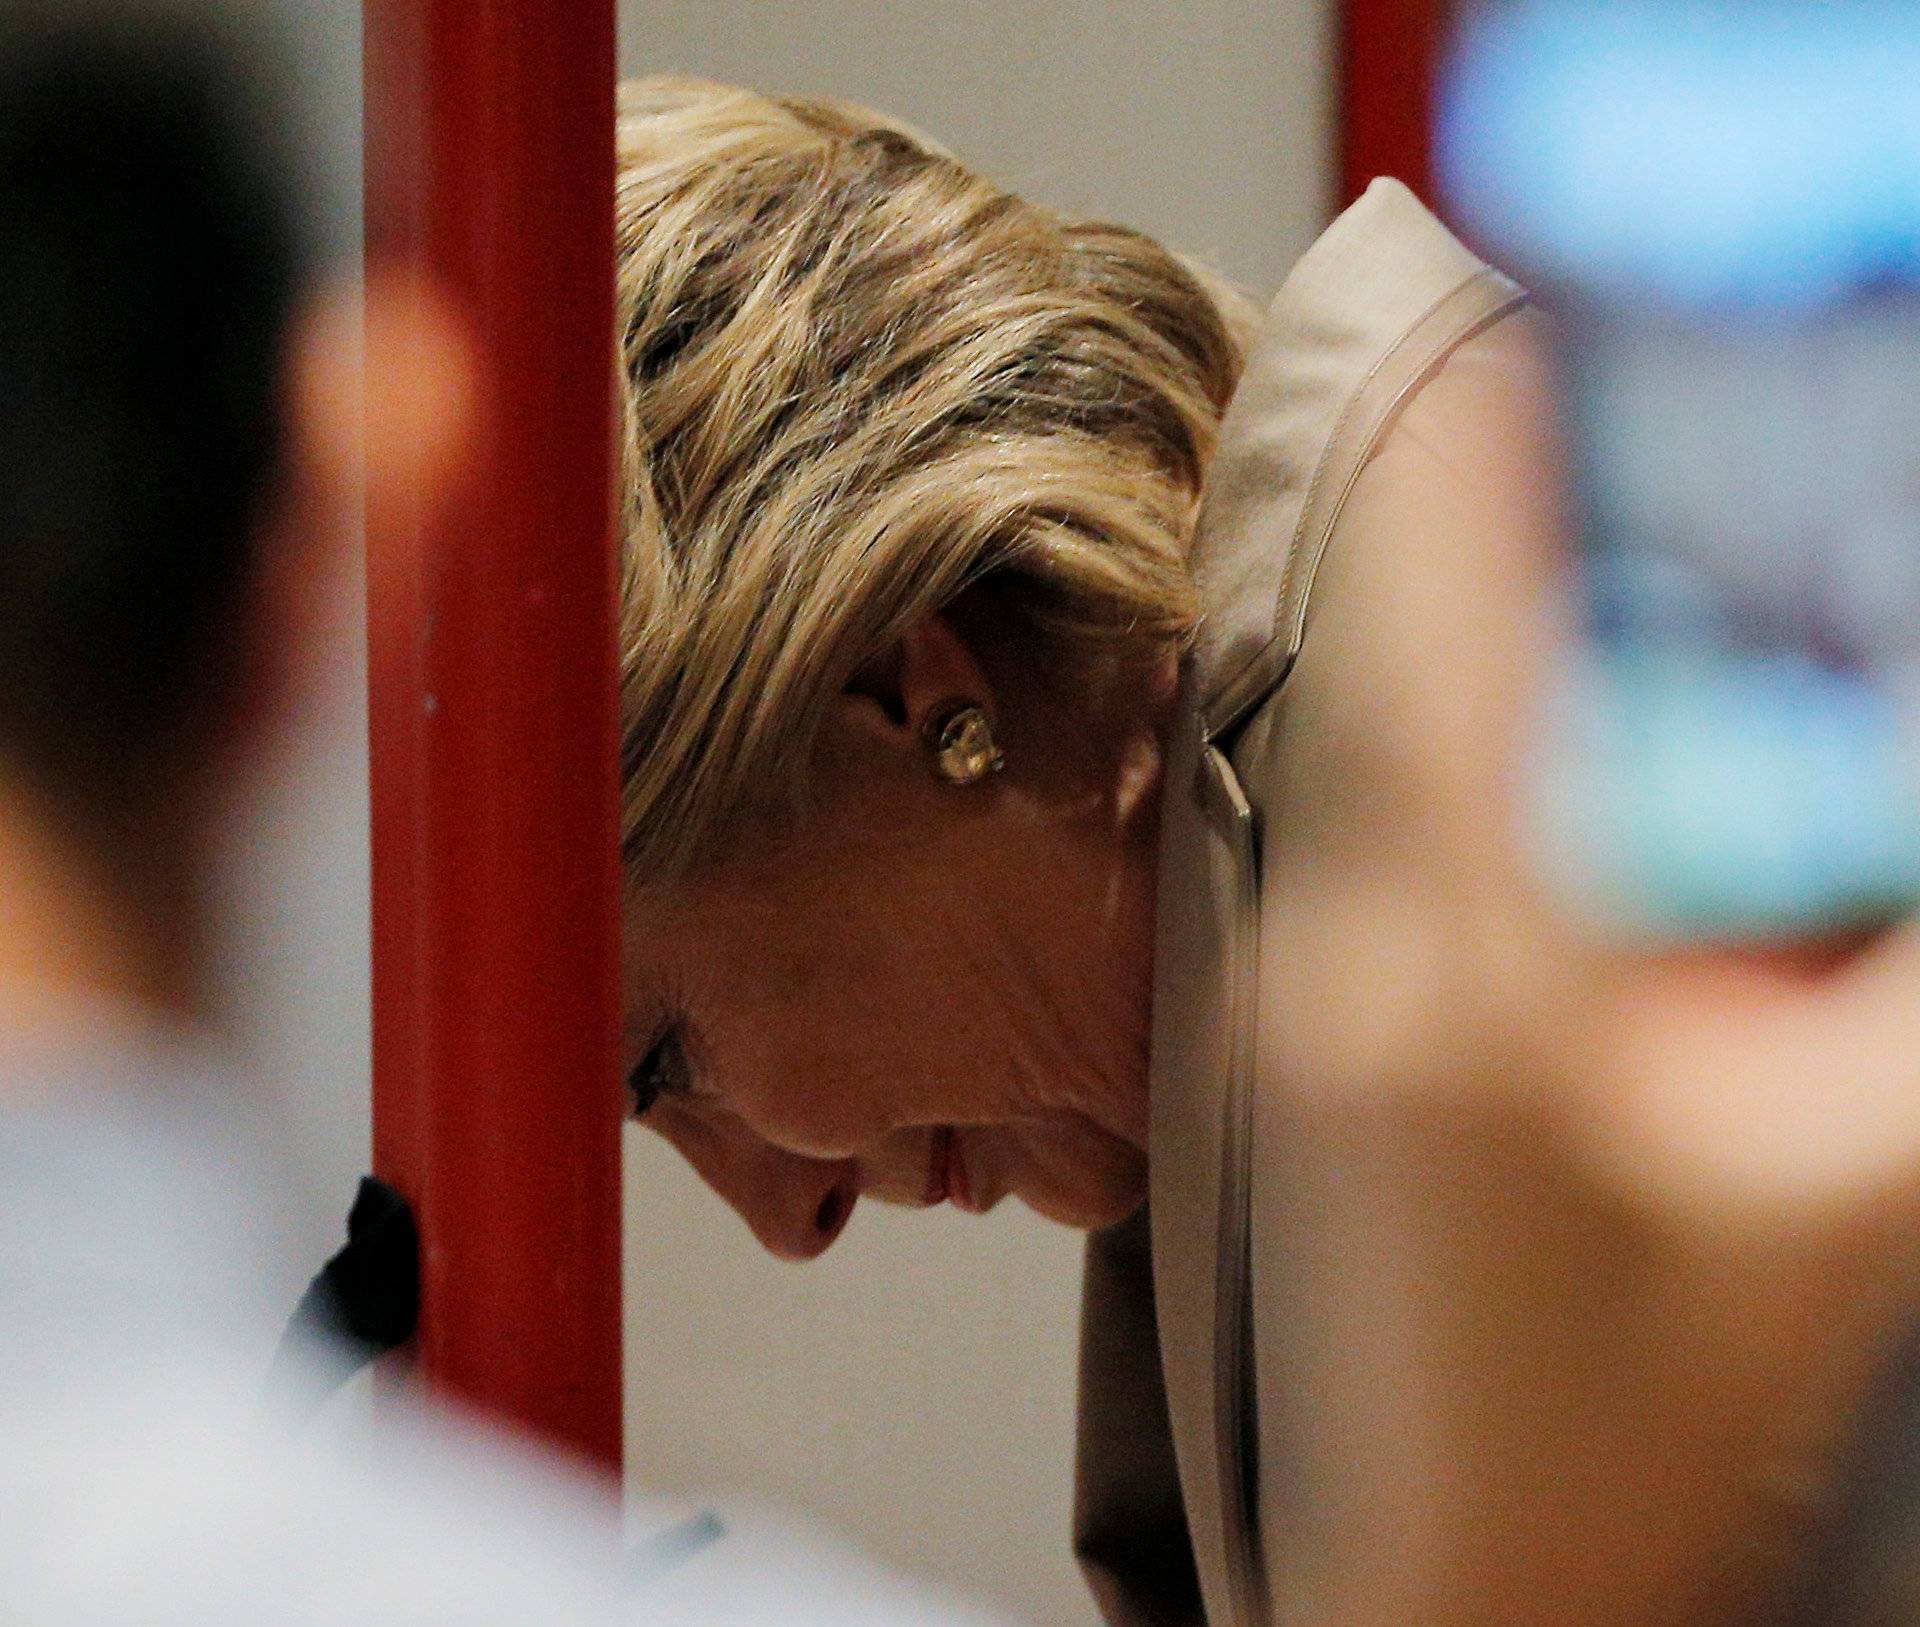 U.S. Democratic presidential nominee Hillary Clinton fills out her ballot at the Douglas Grafflin Elementary School in Chappaqua